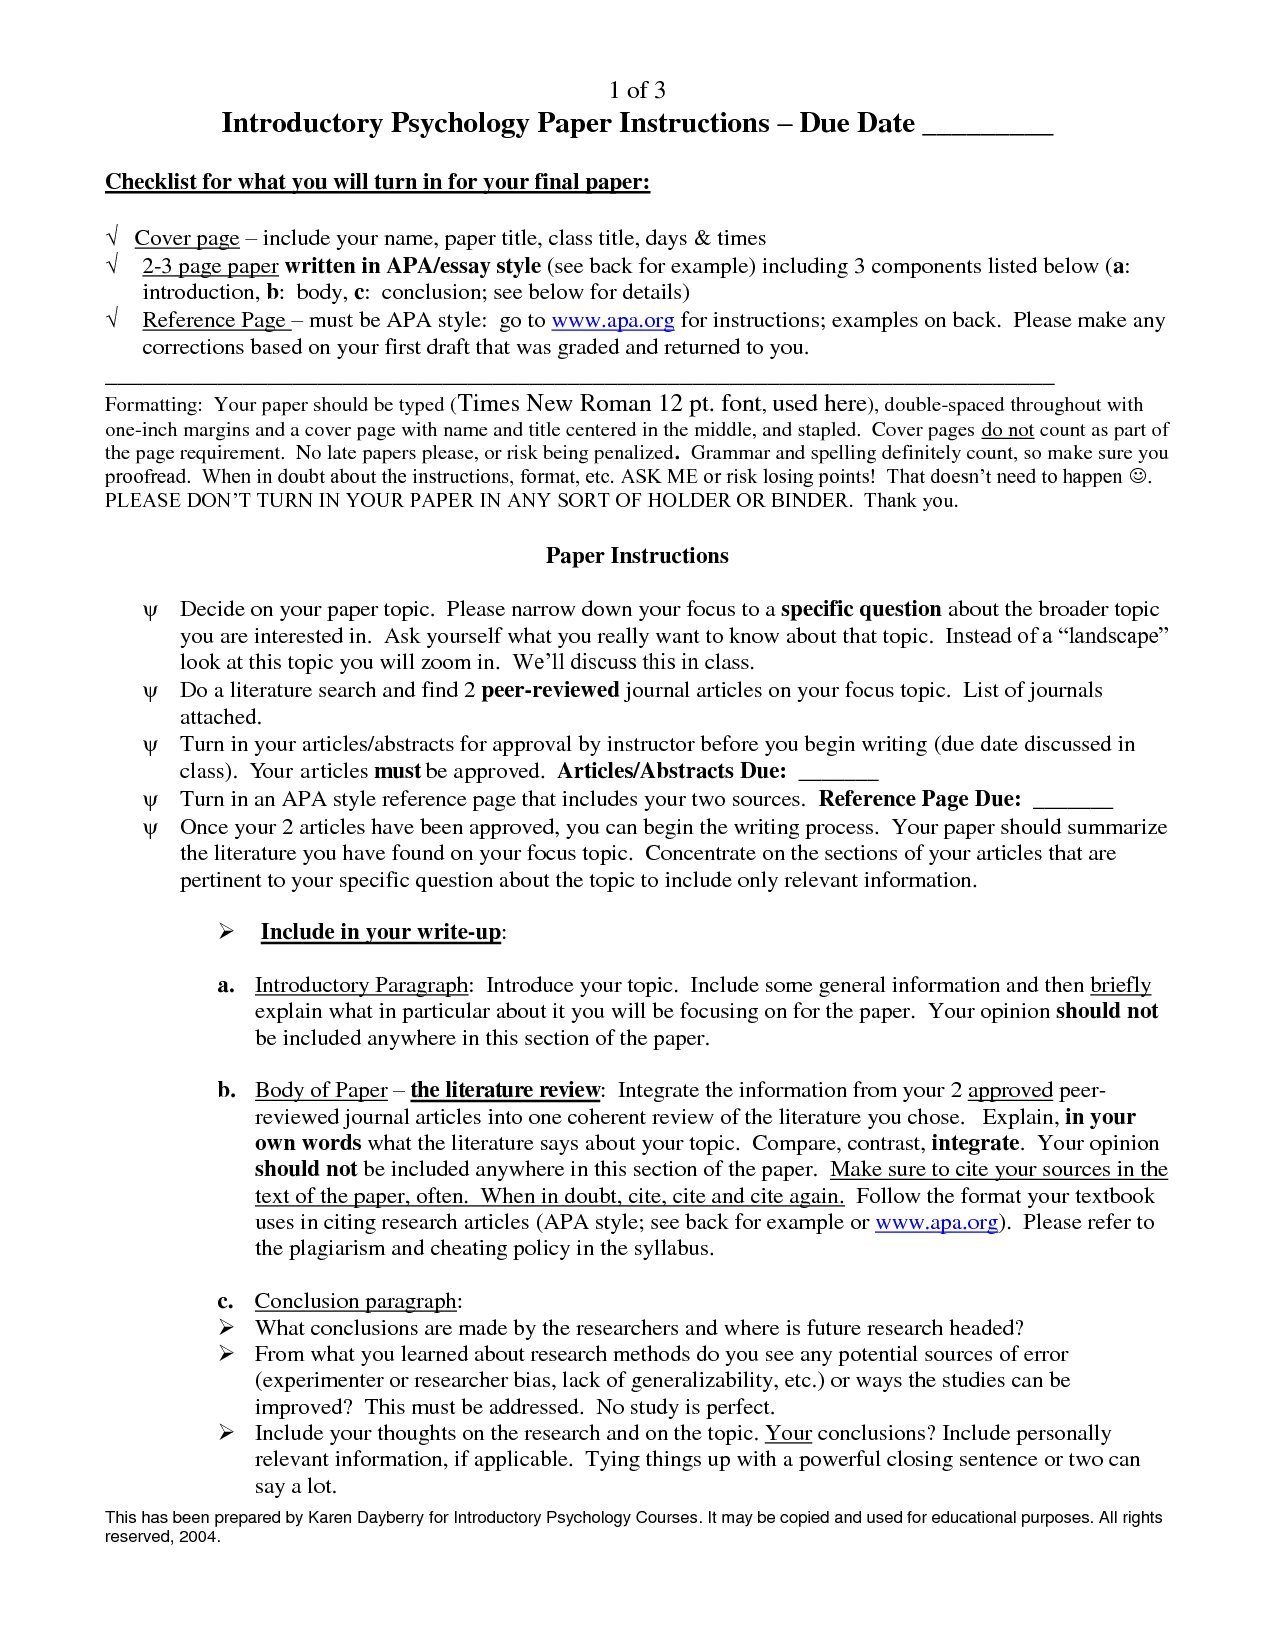 Apa style research paper checklist